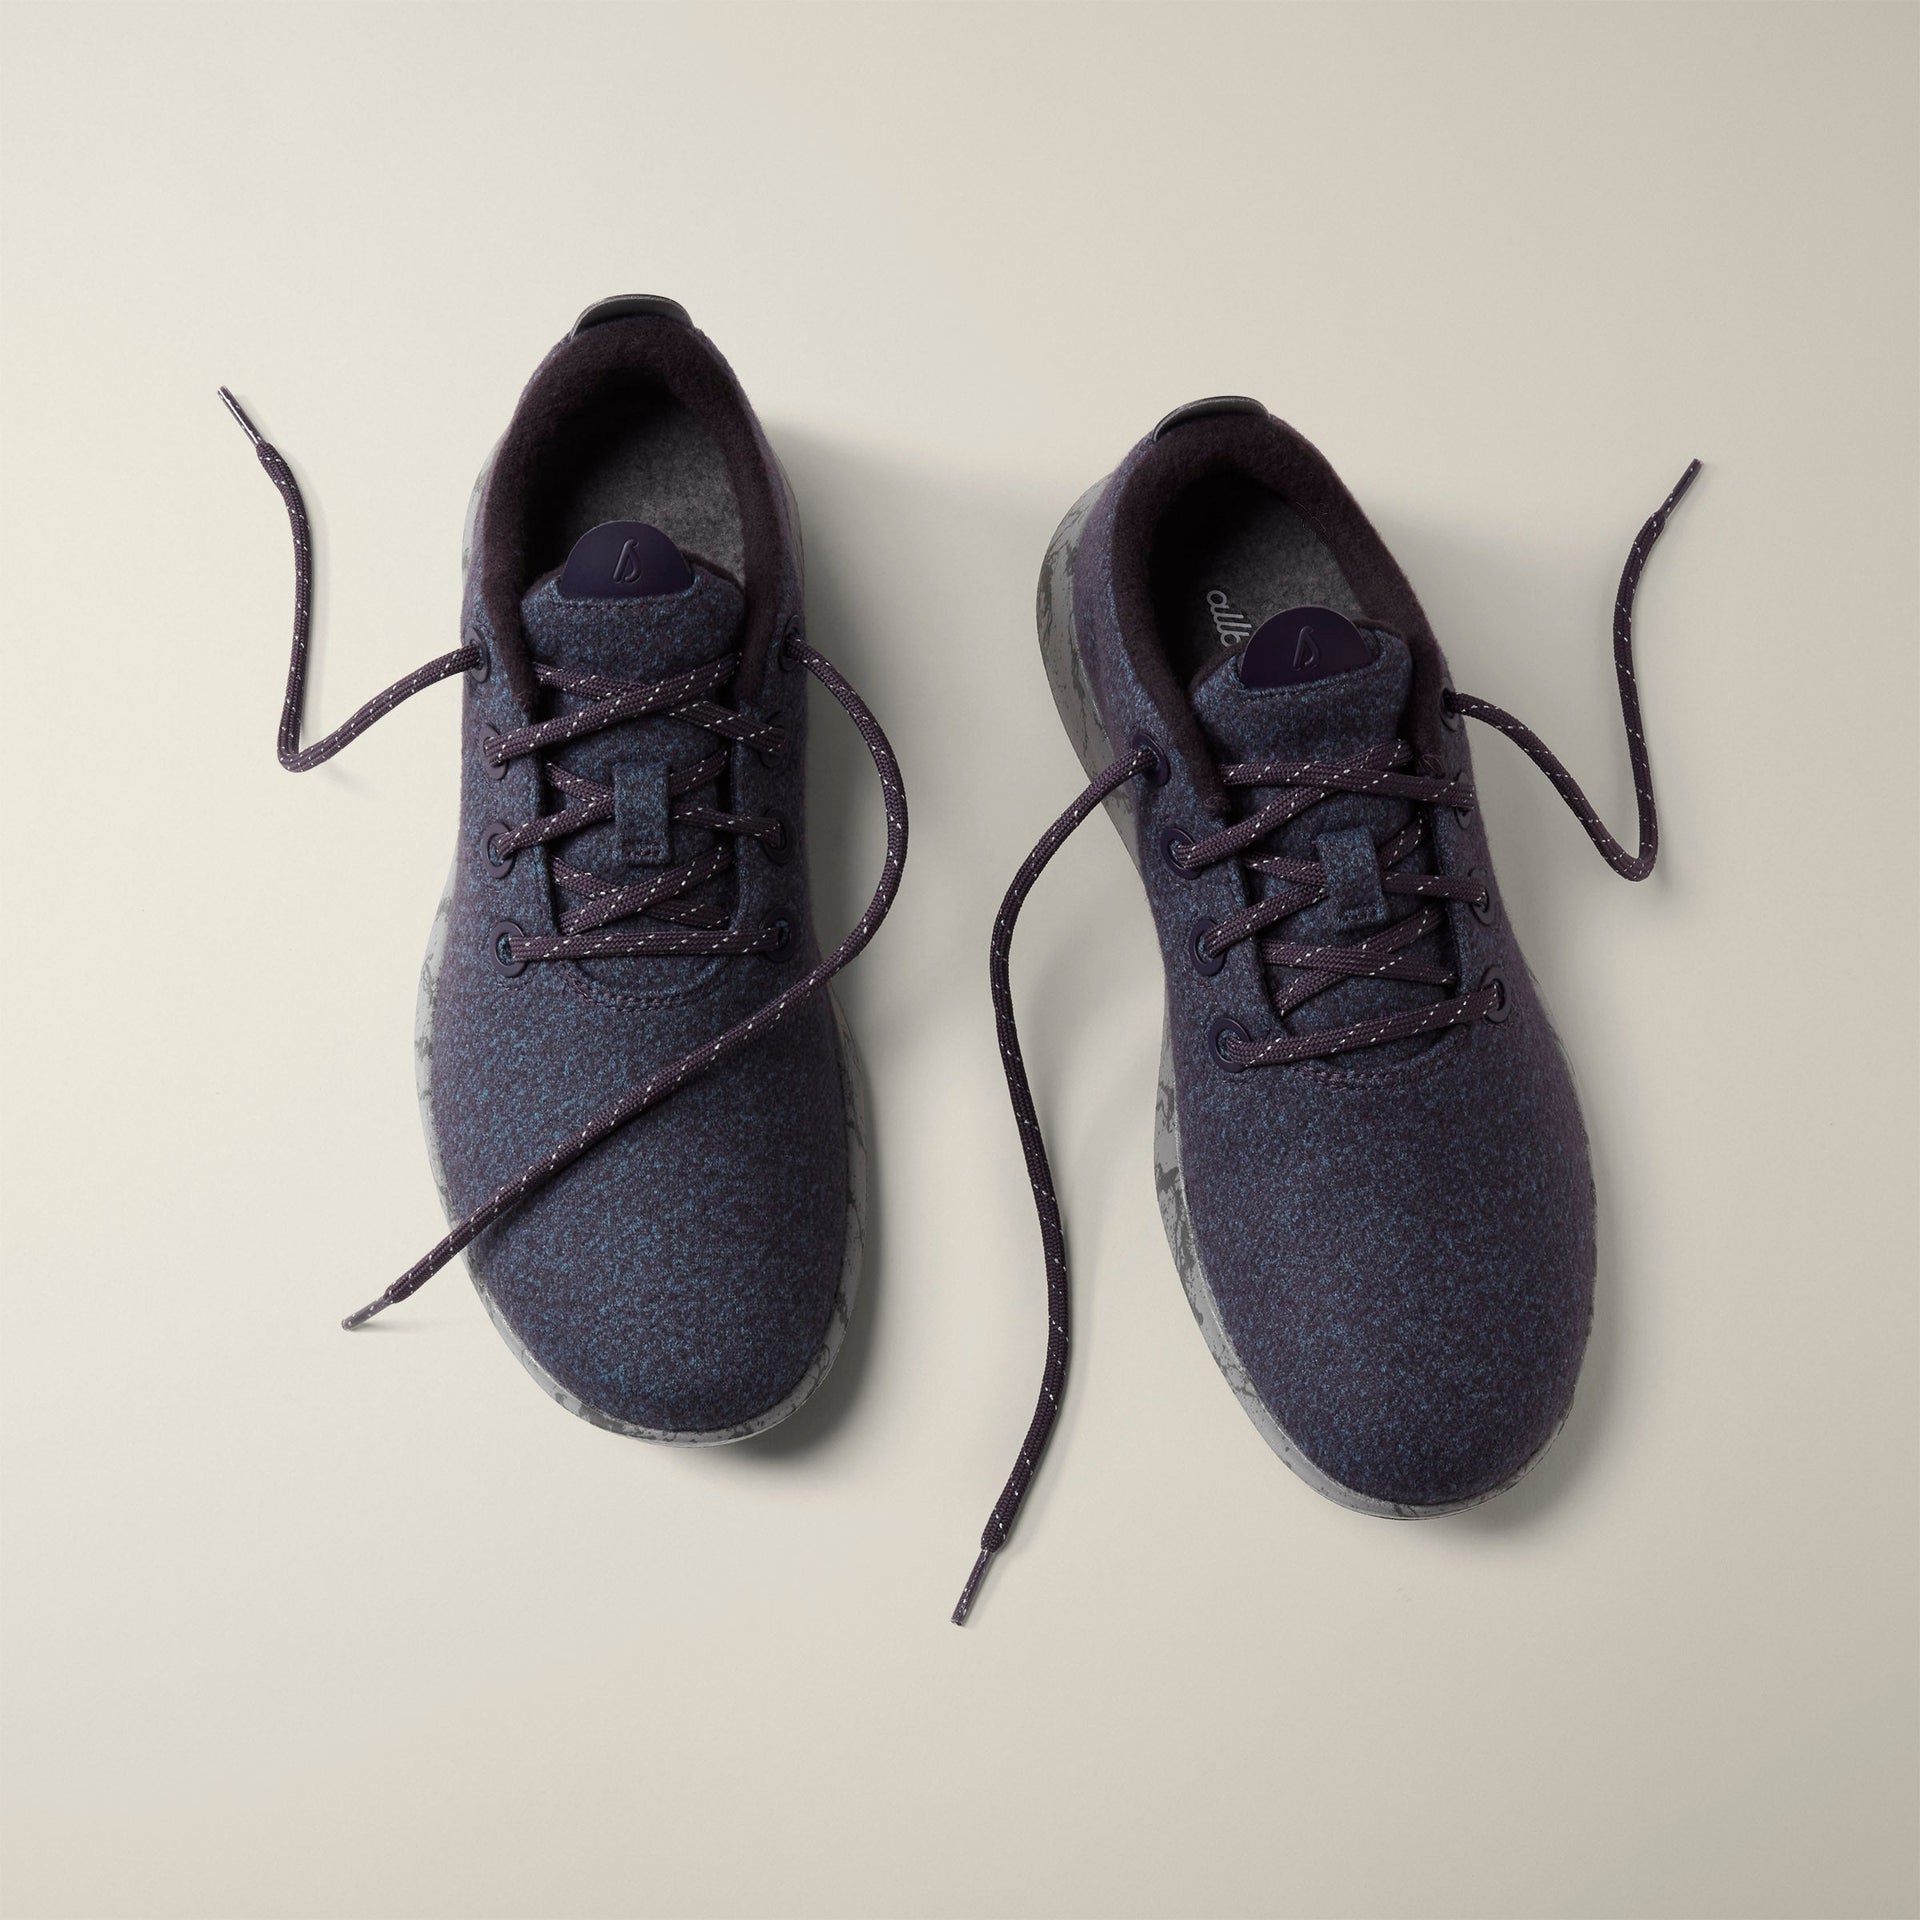 Allbirds Women's Tuke Teal Wool Runner Running Shoes Sneakers Size 9